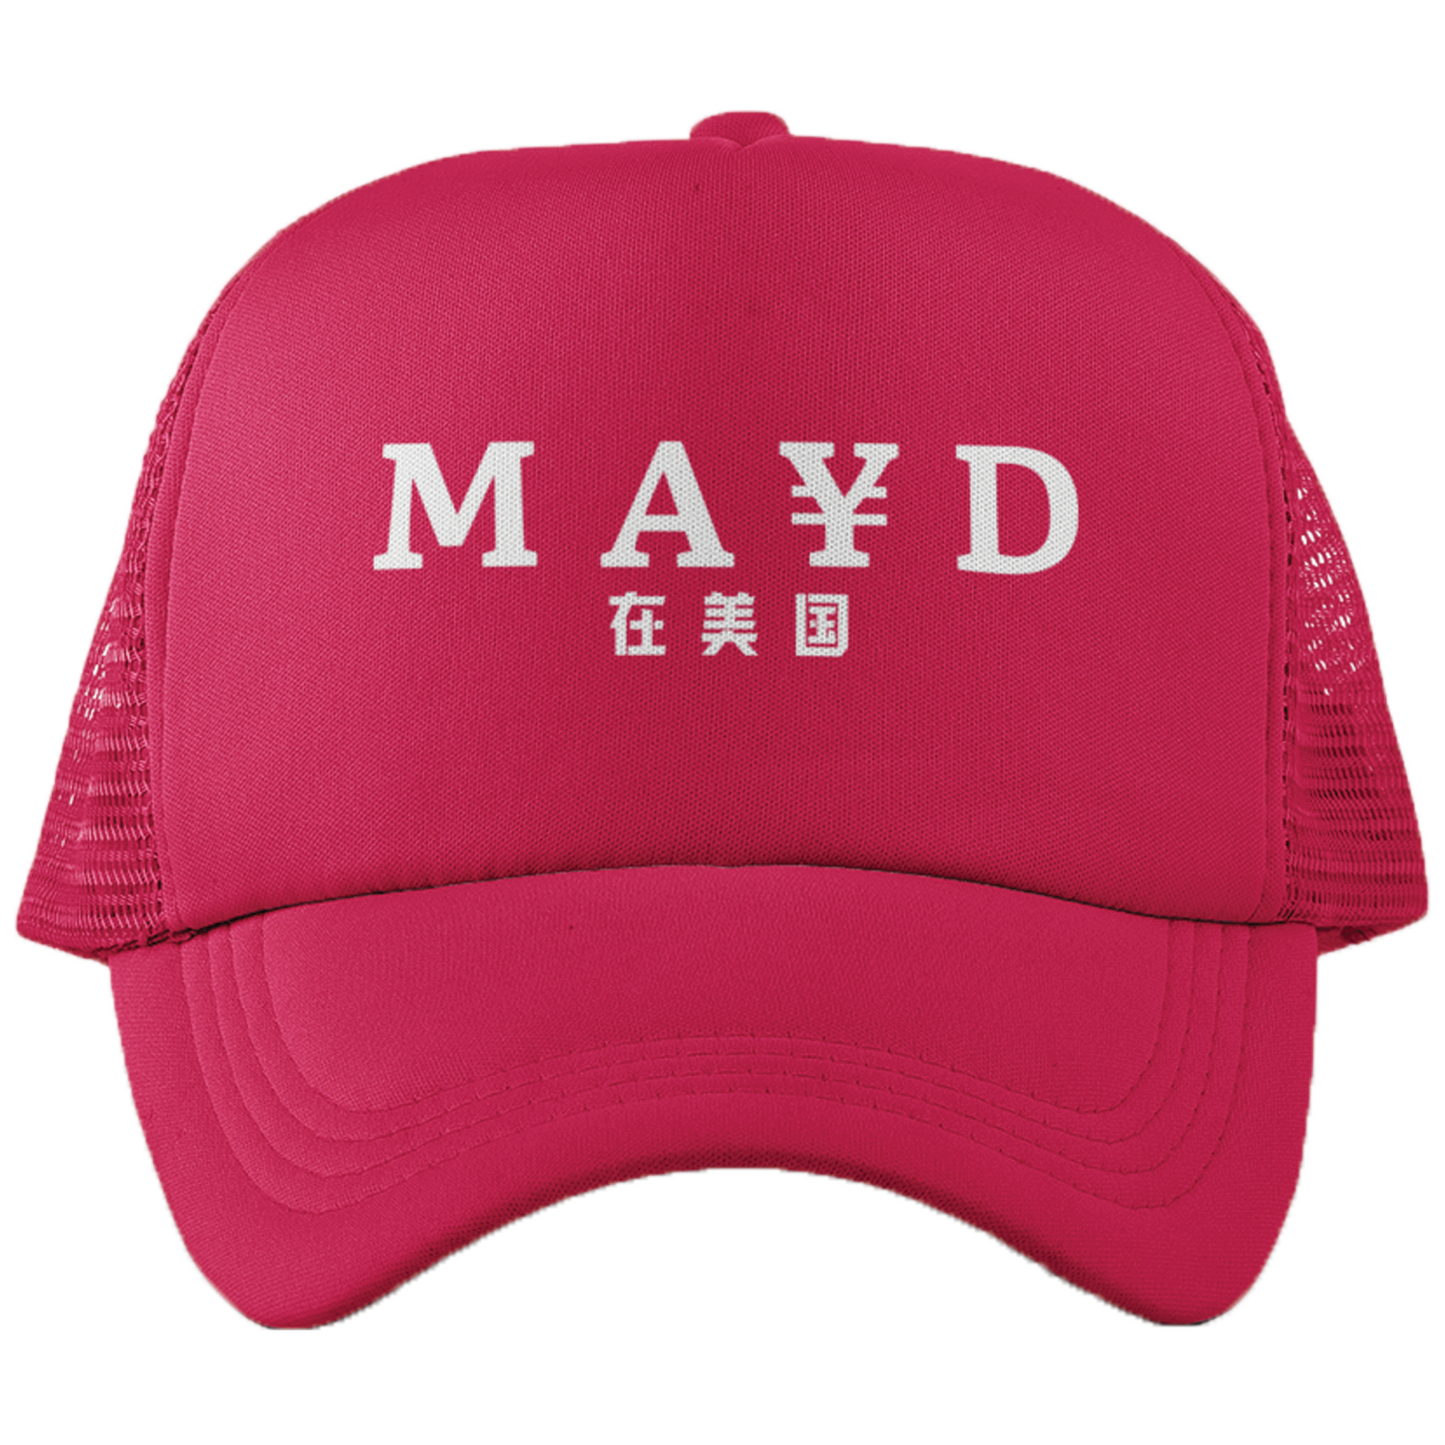 MAYD in America Trucker Hat